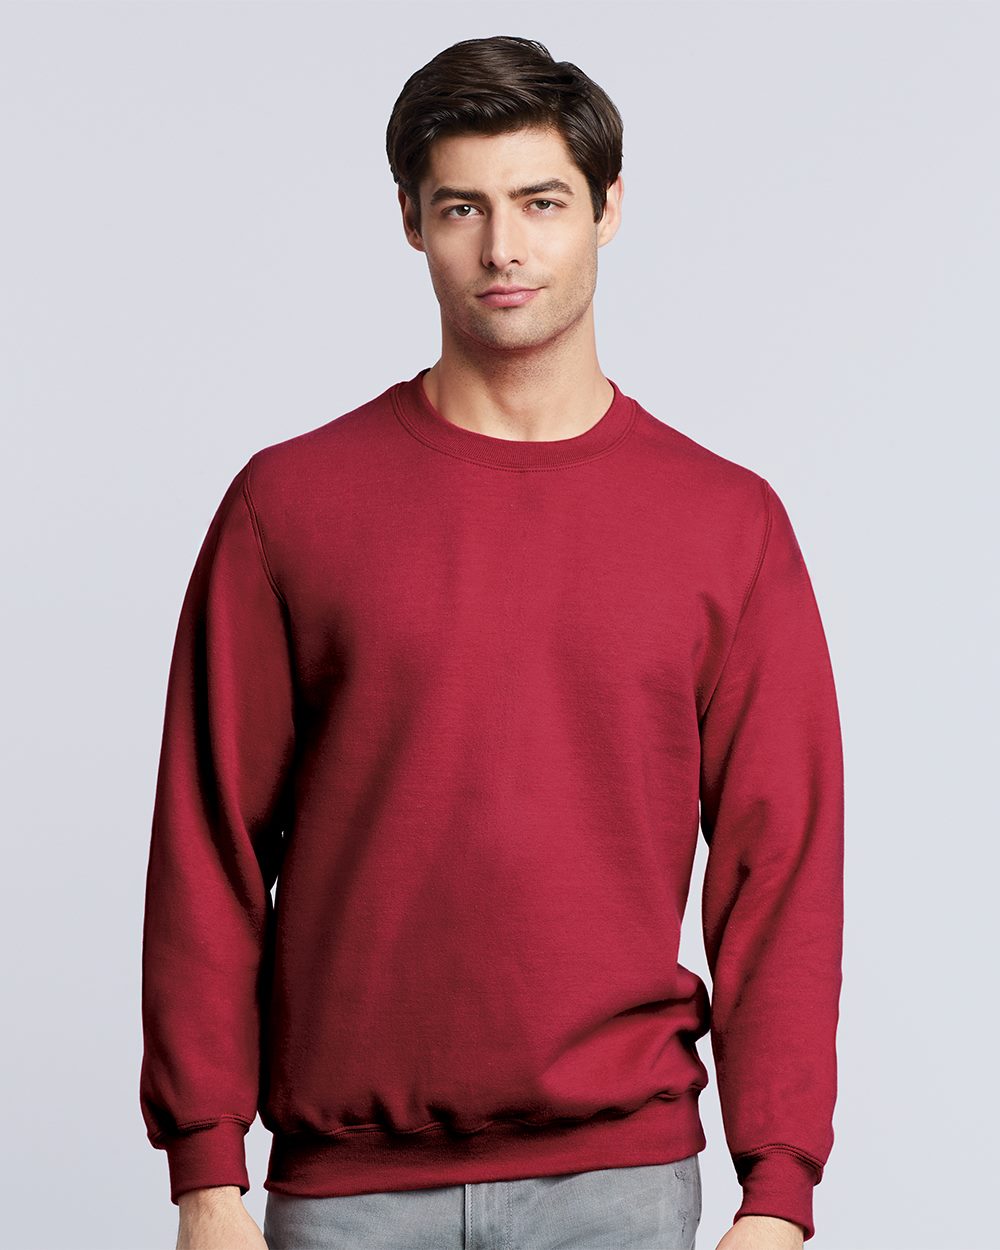 Custom Crewneck Sweater - NEUTRAL COLORS